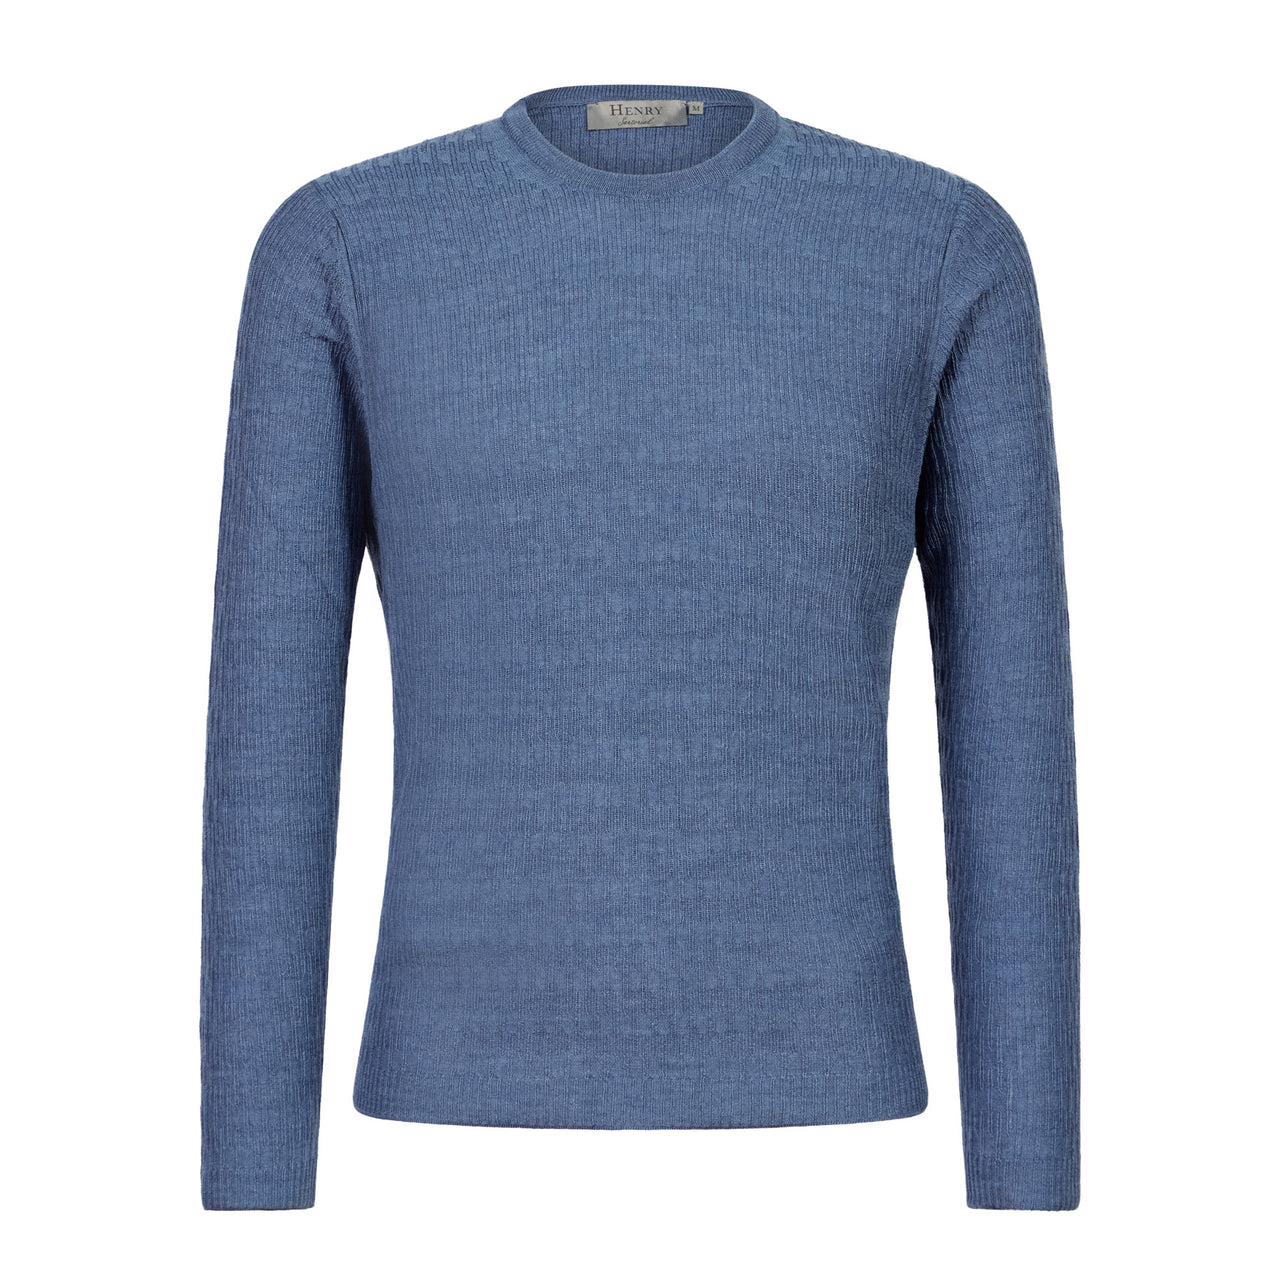 HENRY SARTORIAL Textured Wool Crewneck 14GG BLUE STONE